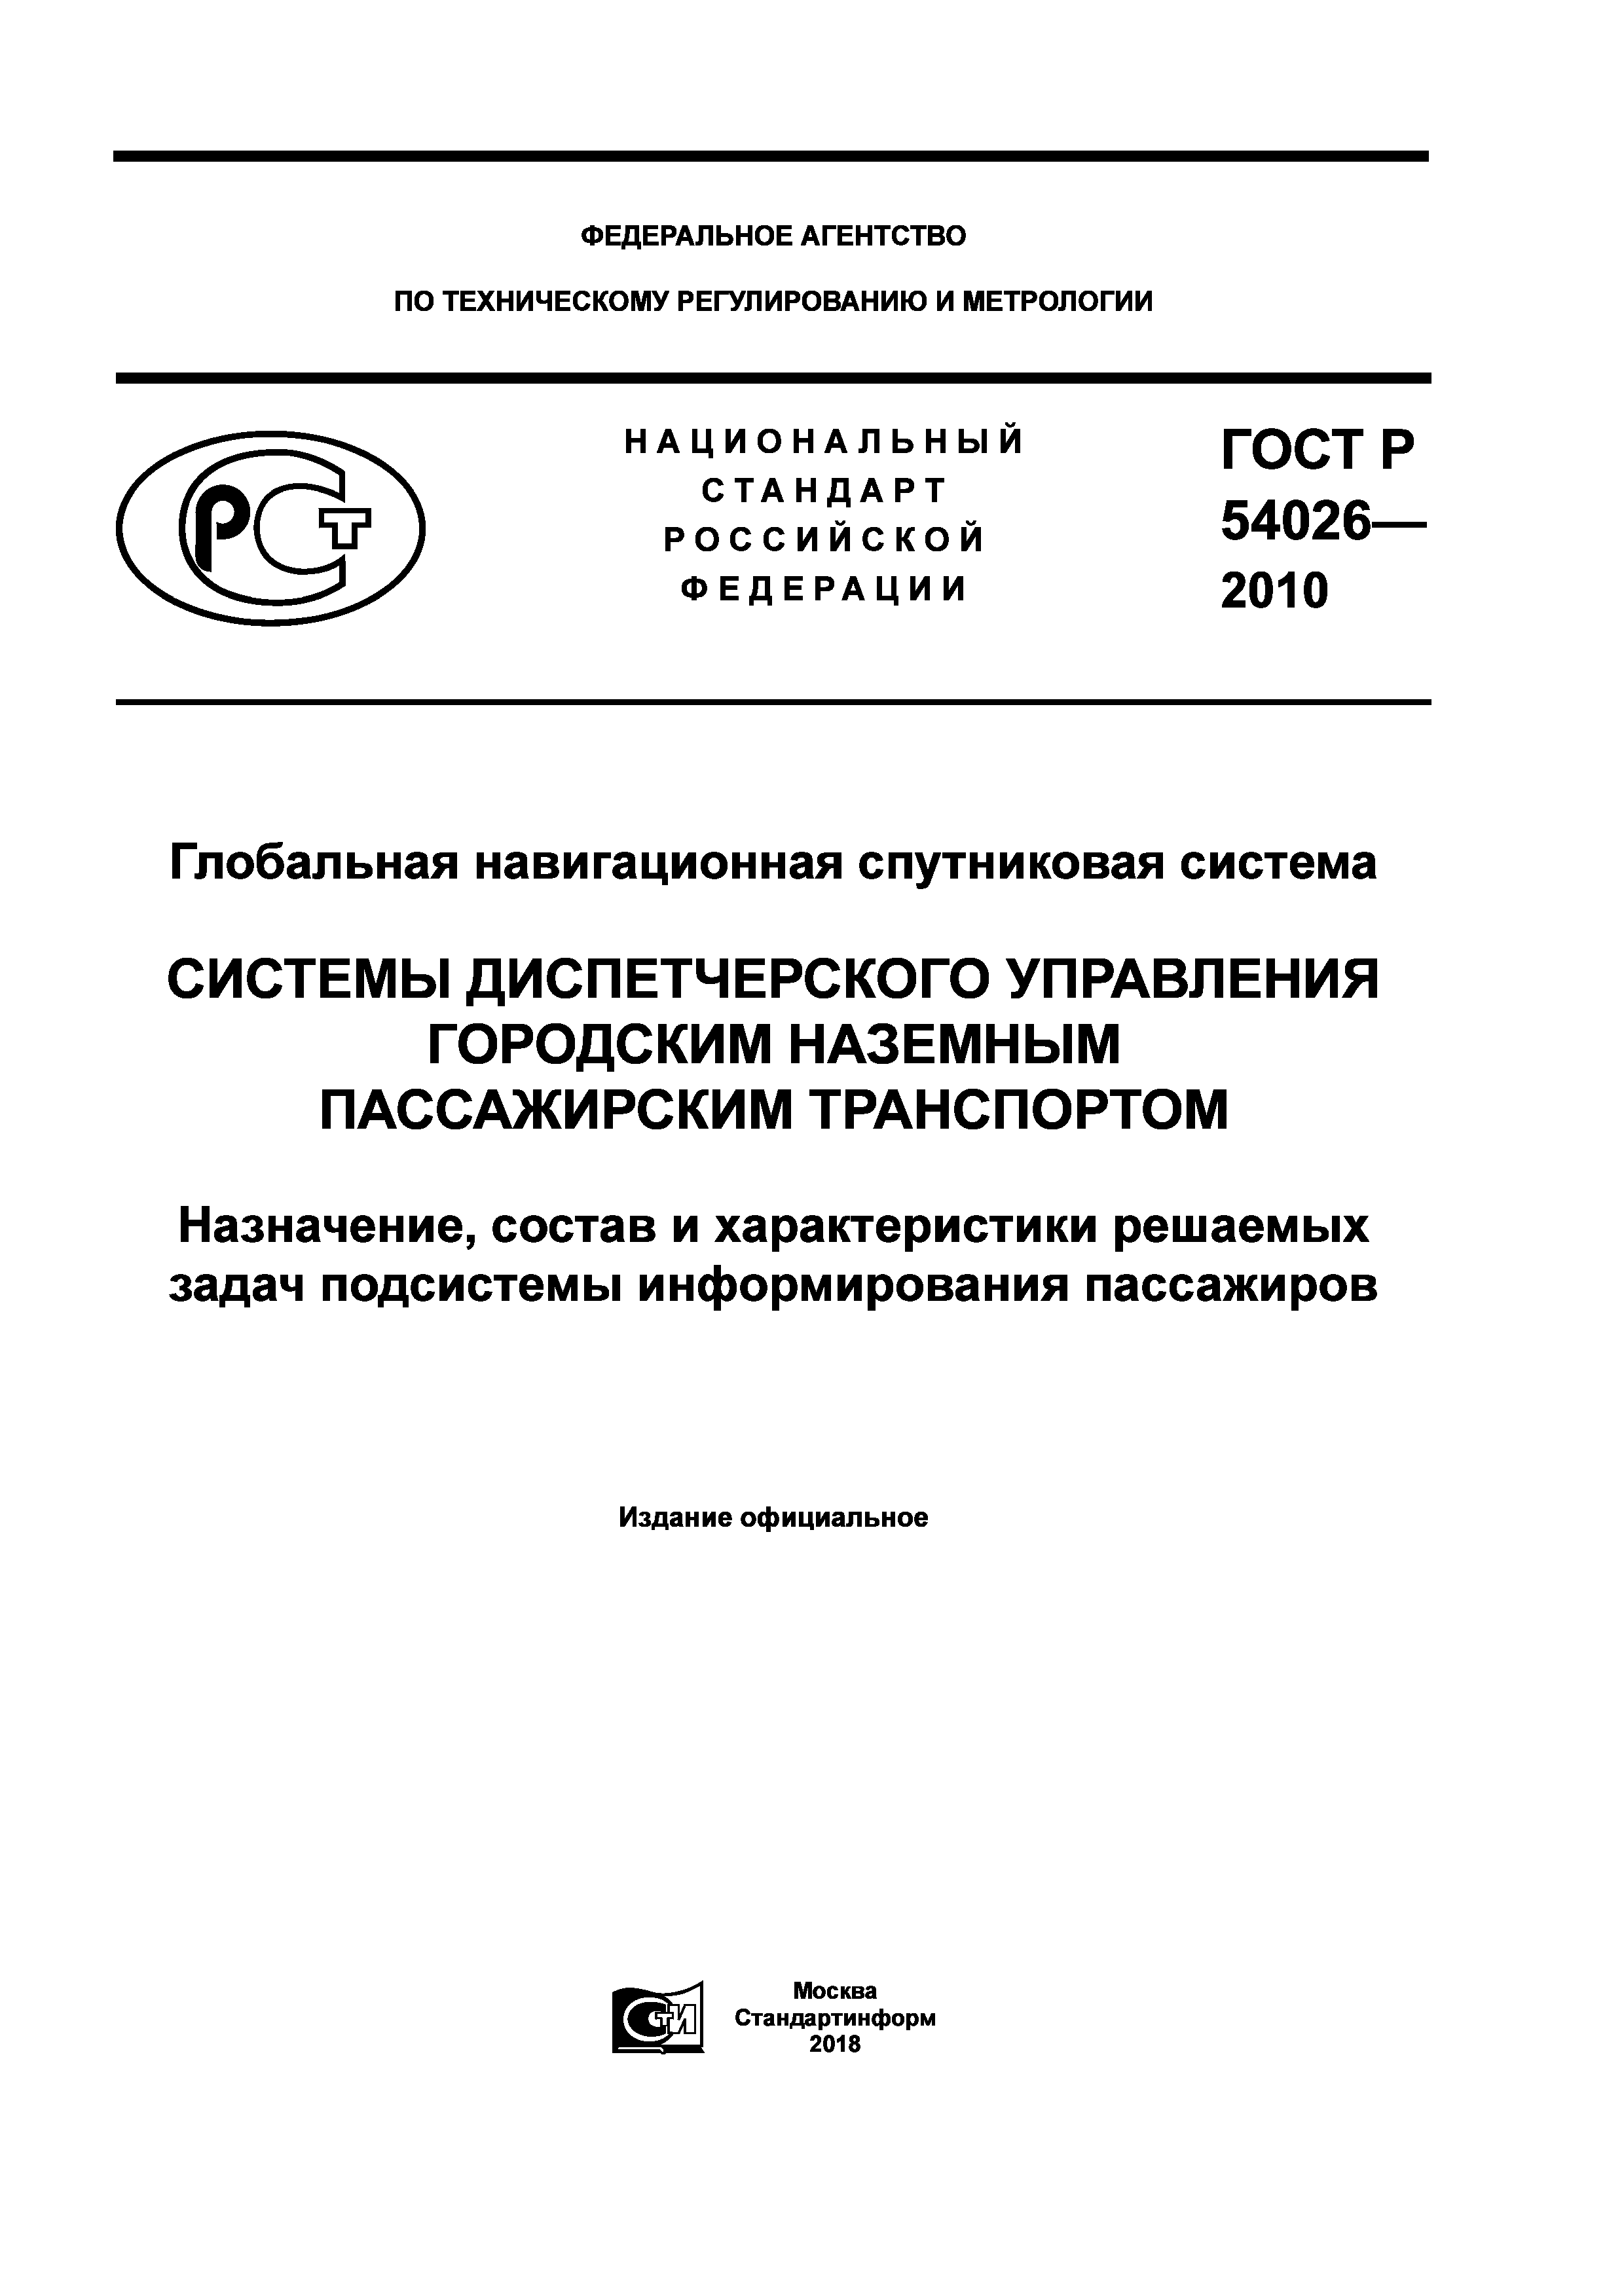 ГОСТ Р 54026-2010